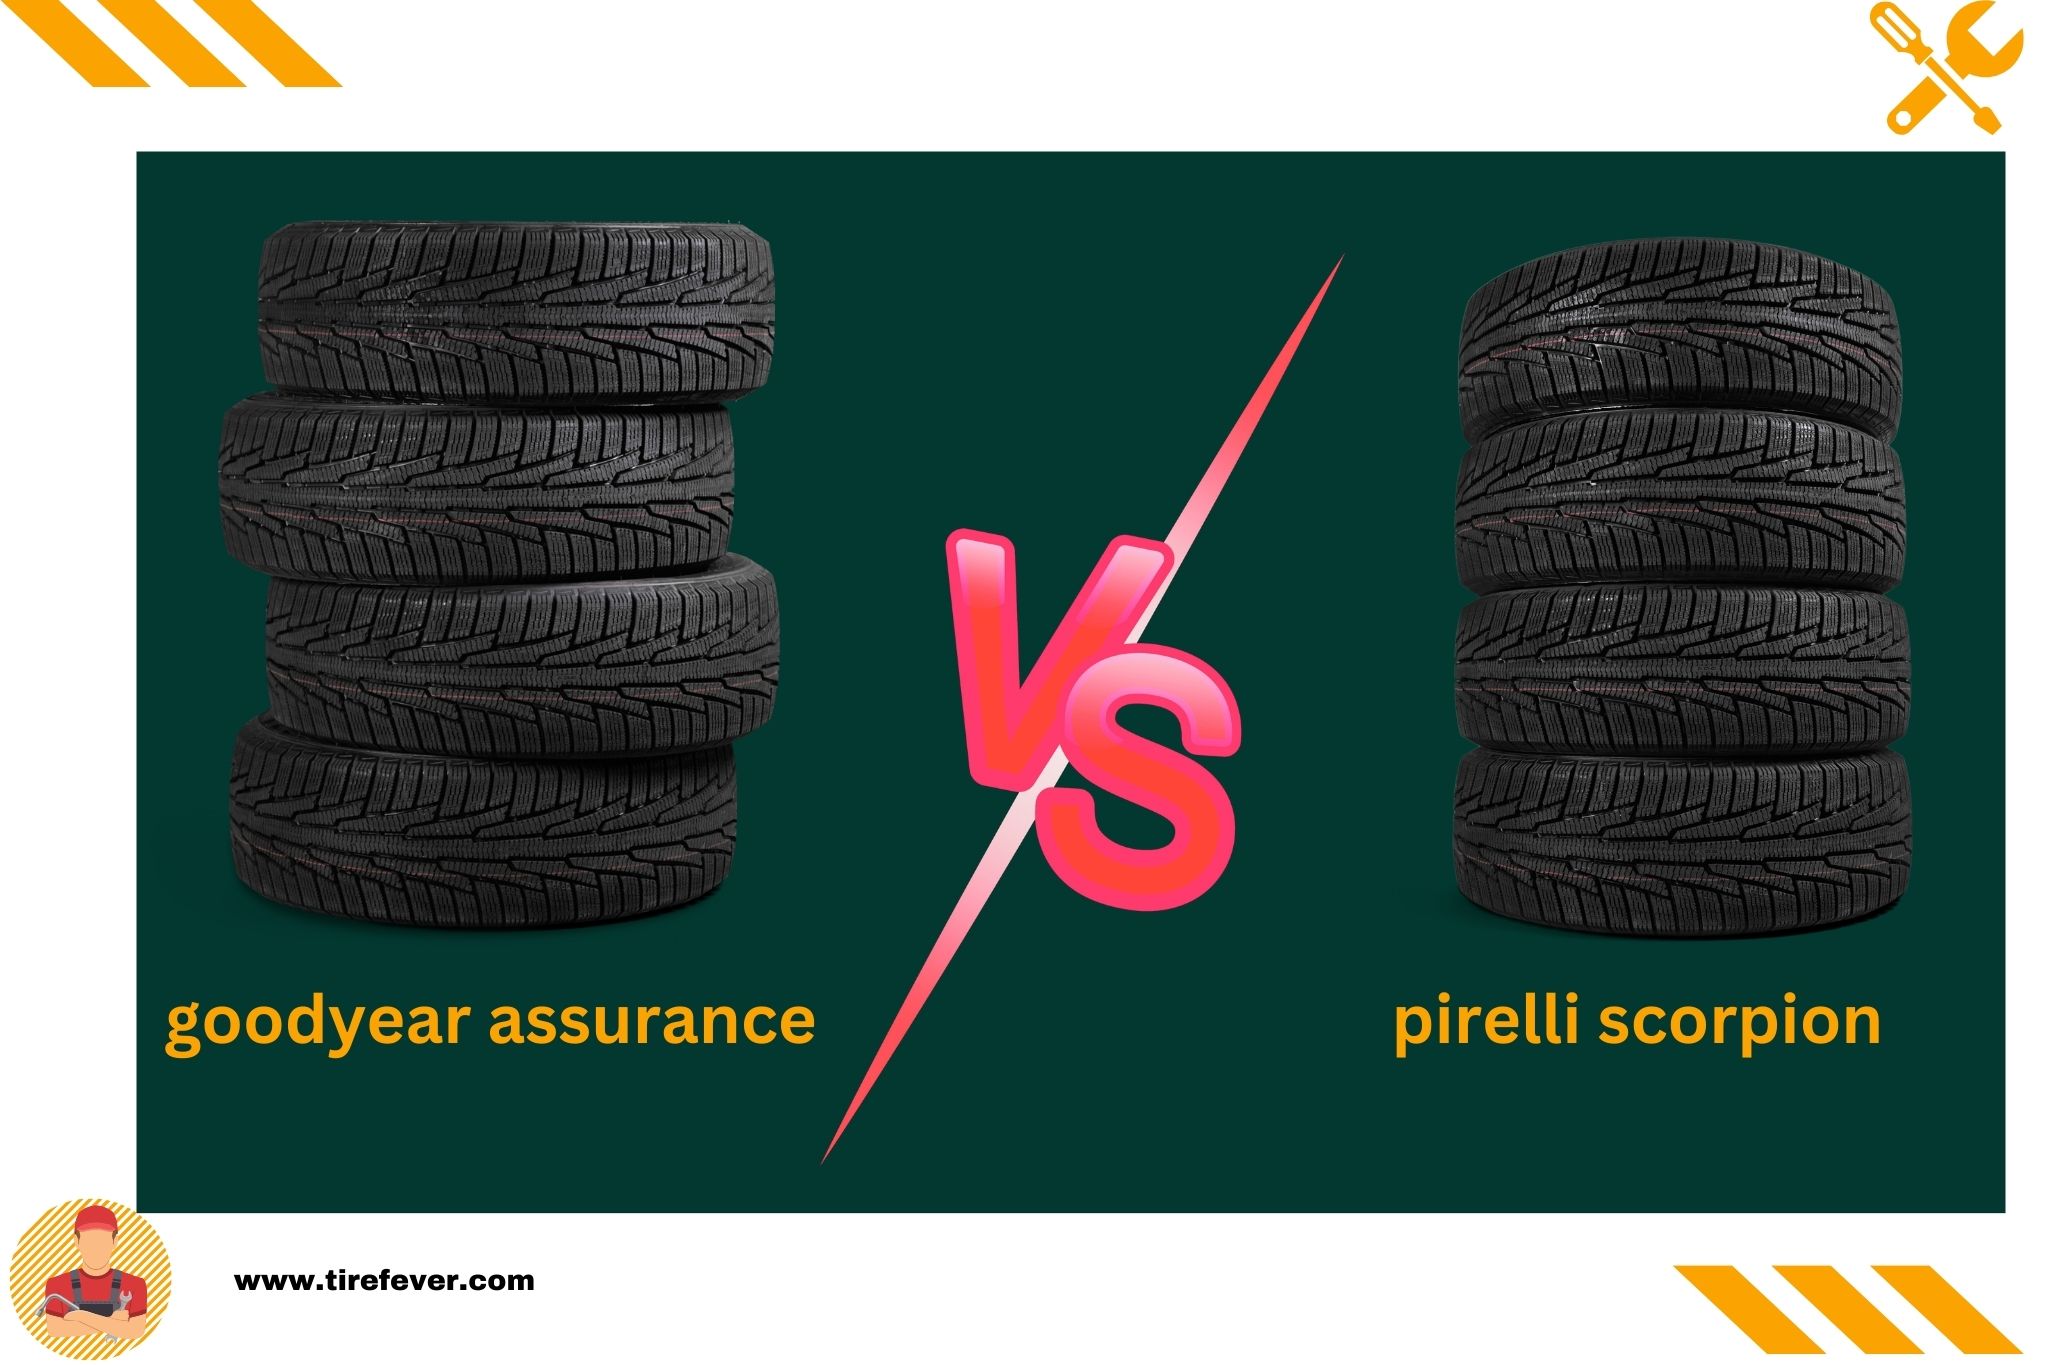 goodyear assurance vs pirelli scorpion